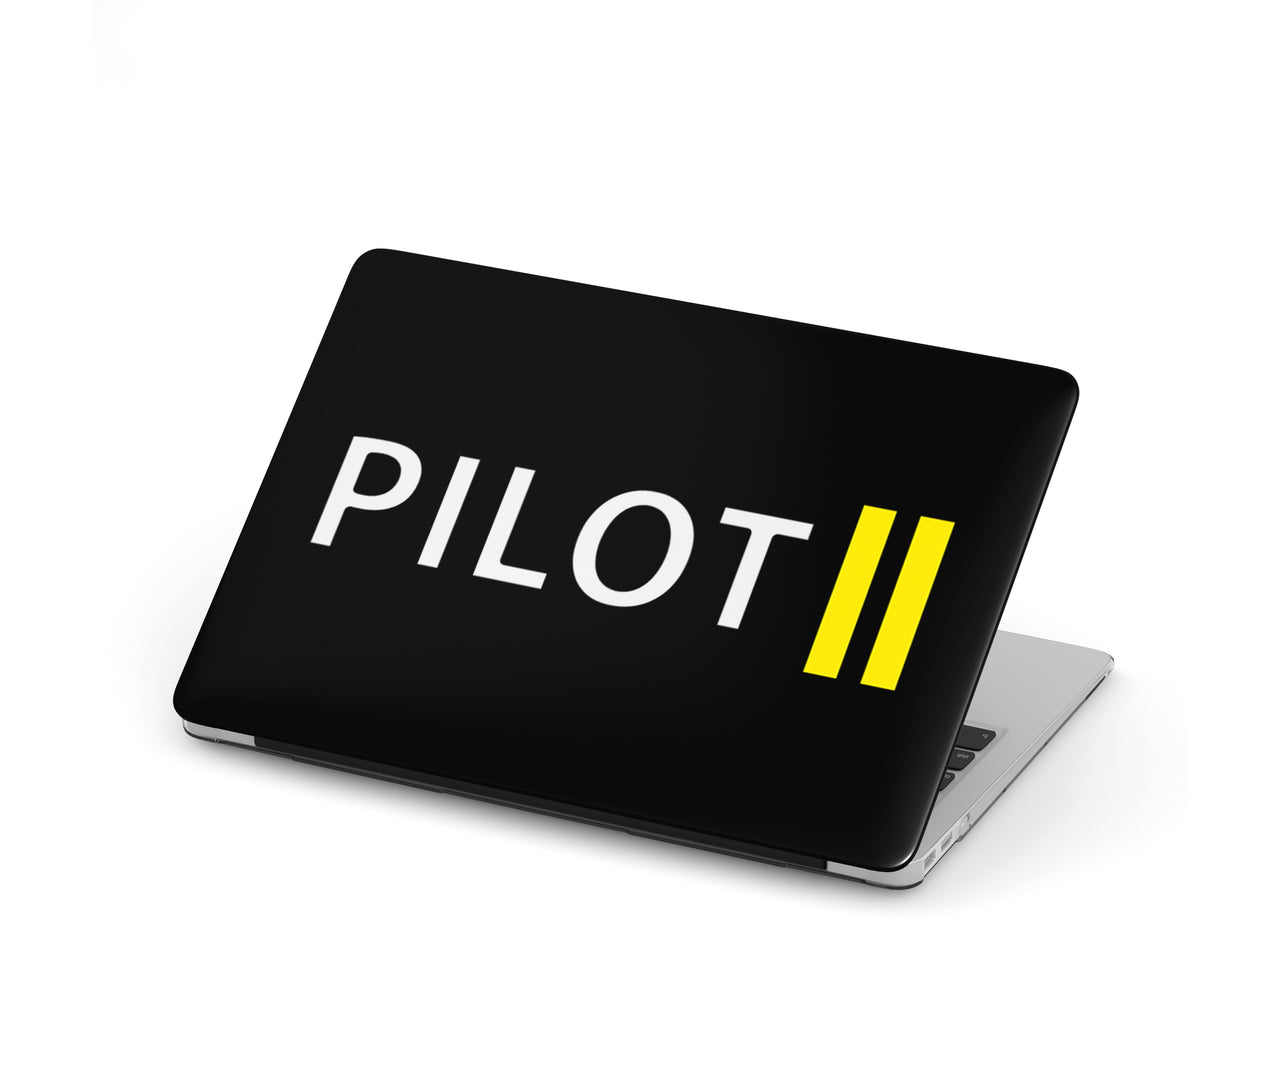 Pilot & Stripes (2 Lines) Designed Macbook Cases